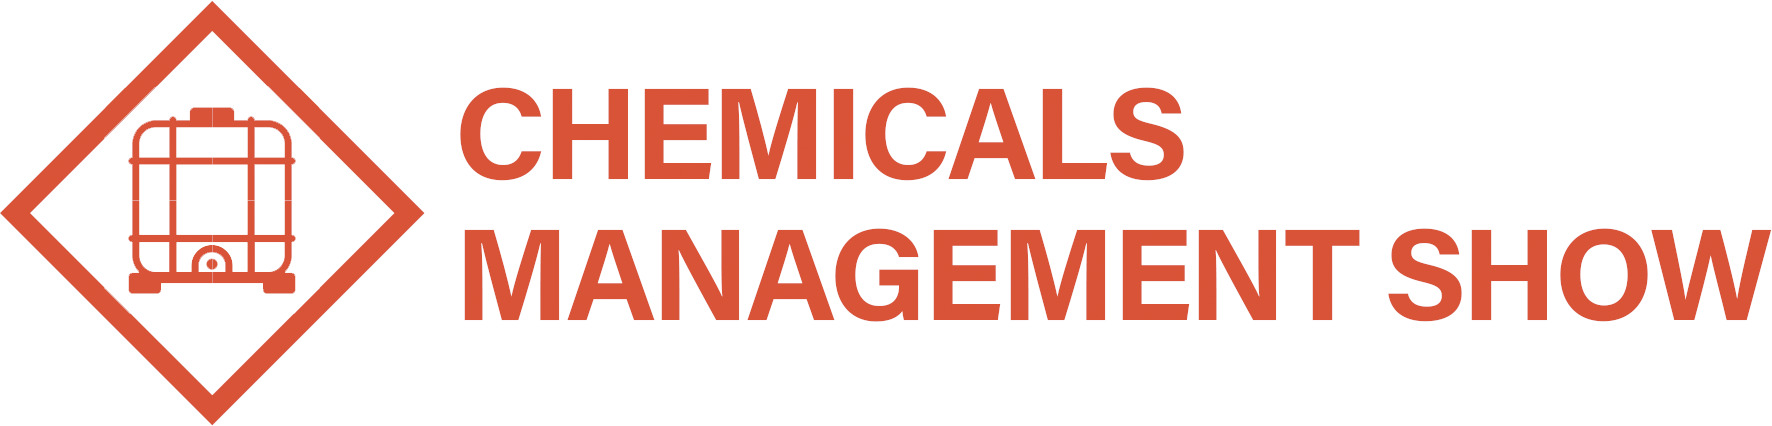 Chemicals Management Show